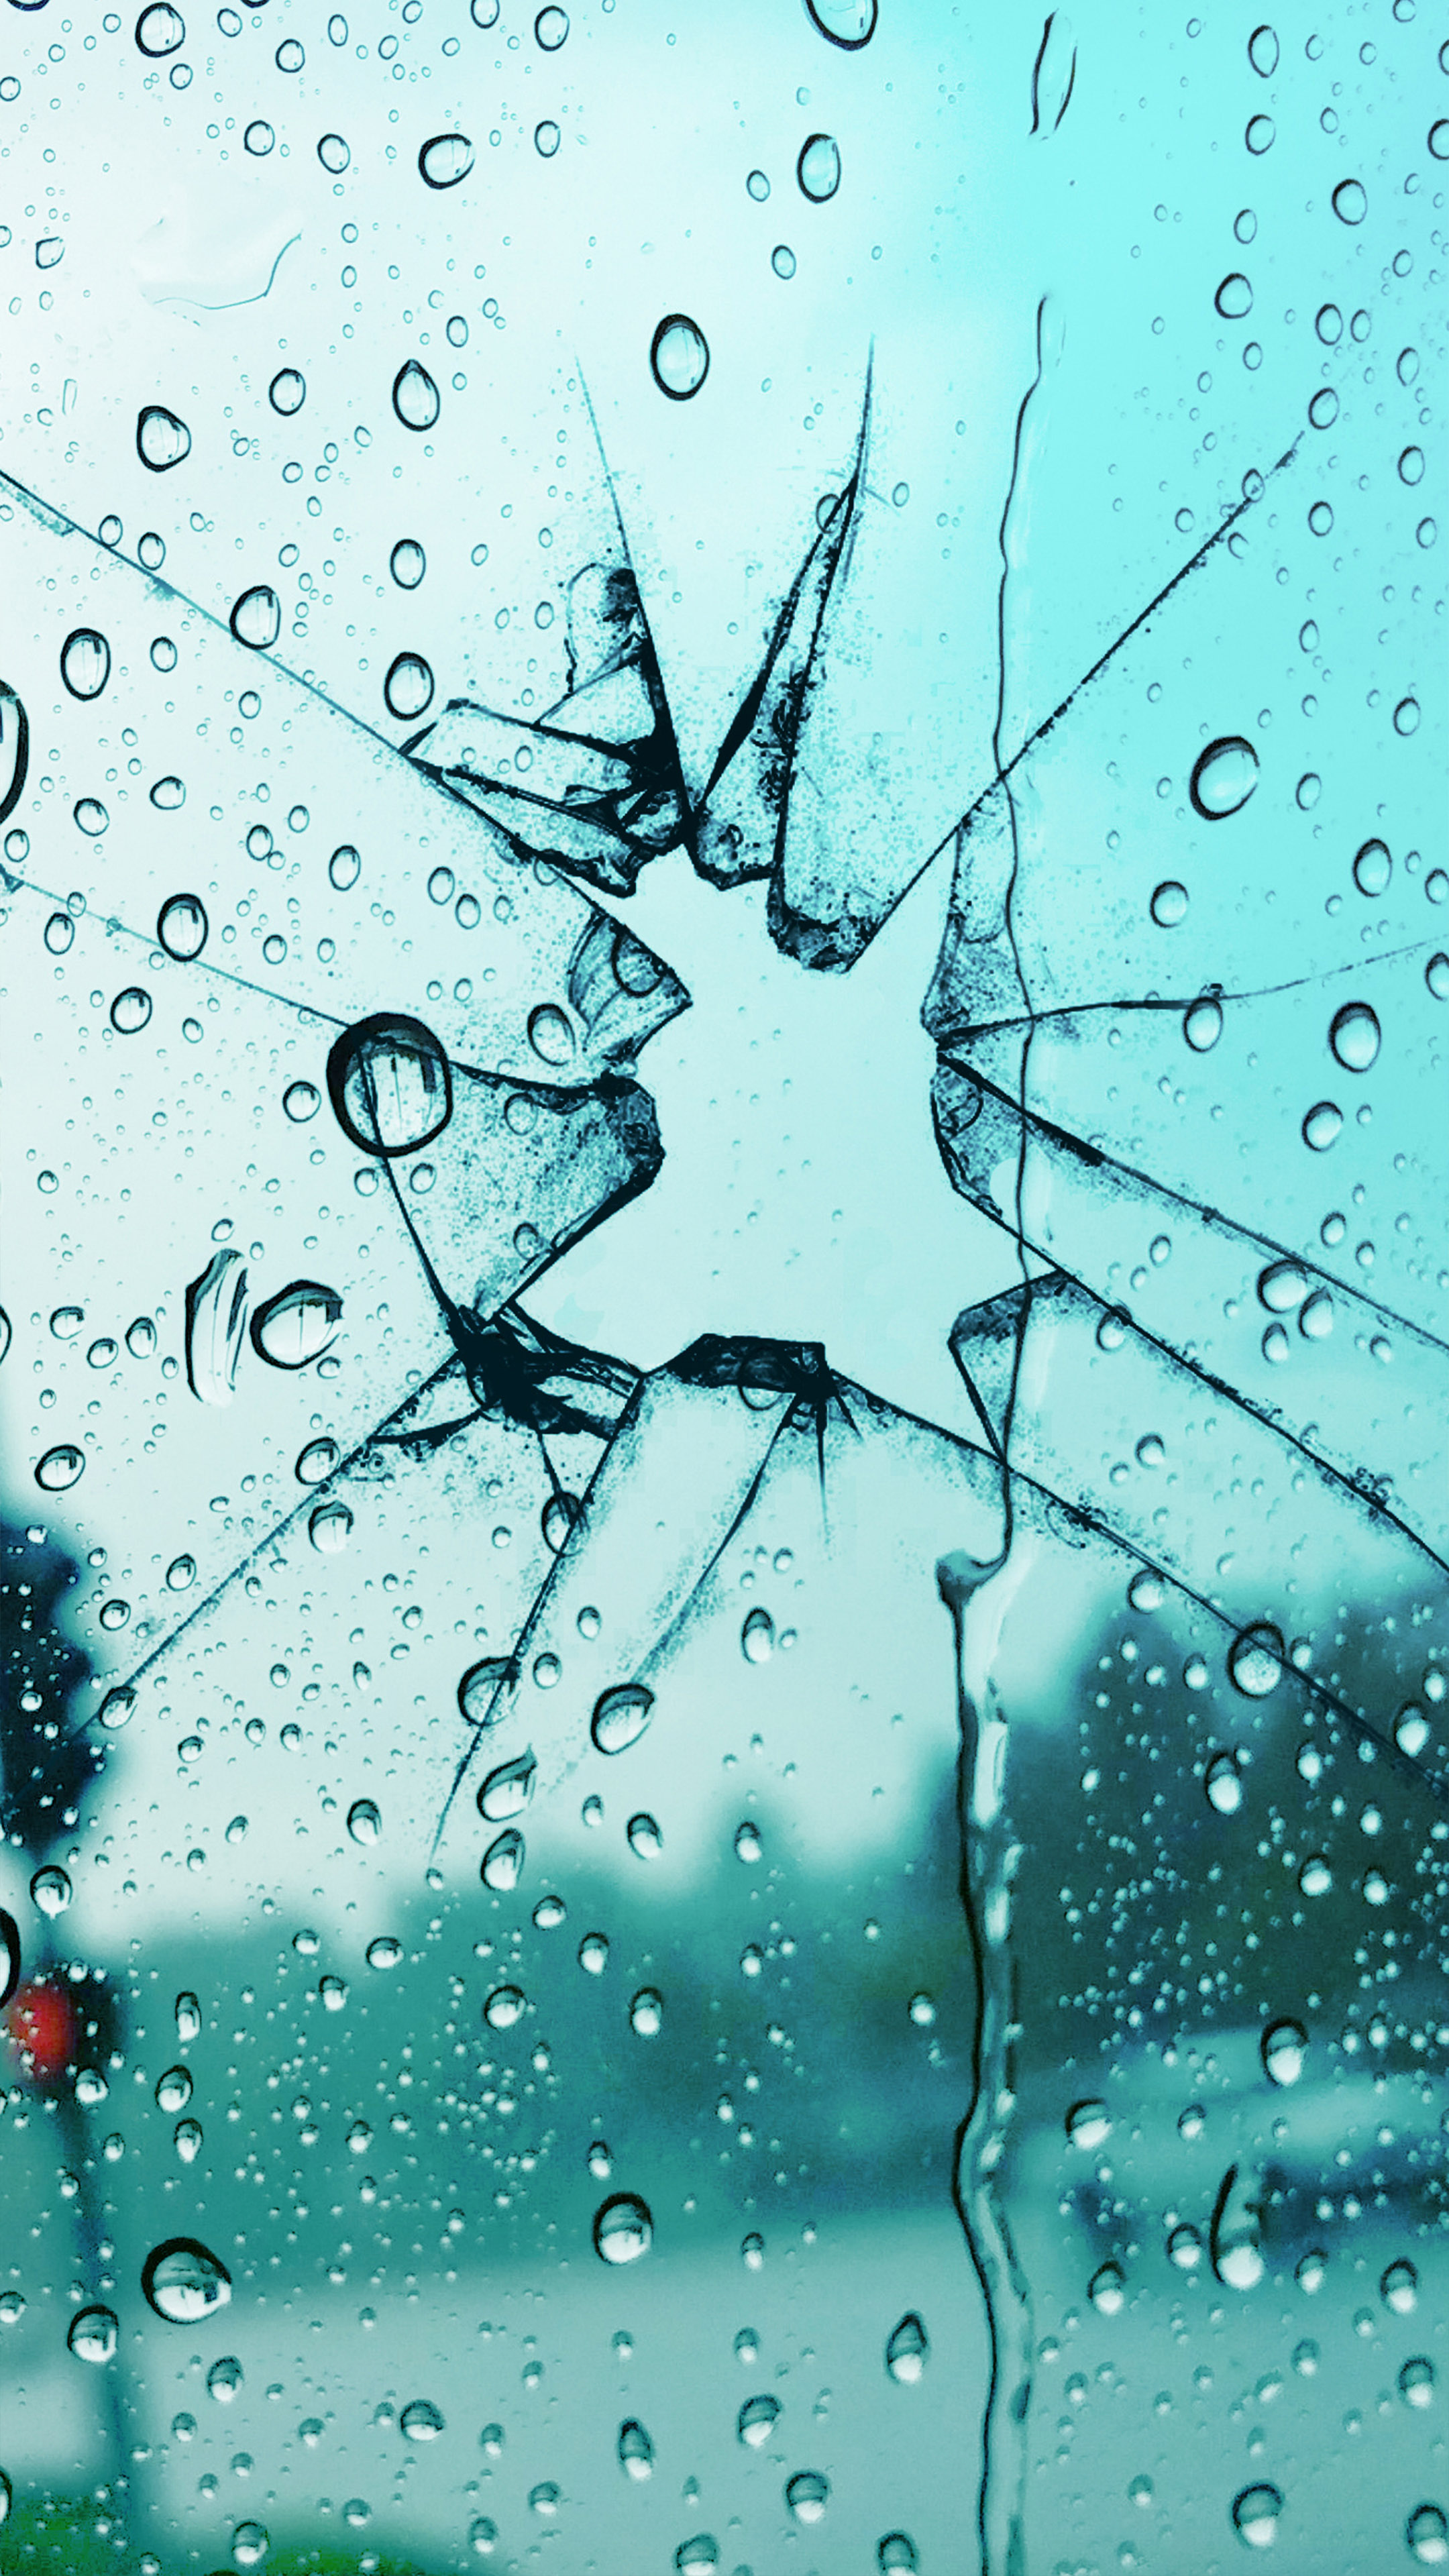 Broken Glass Rain Drops 4K Ultra HD Mobile Wallpaper